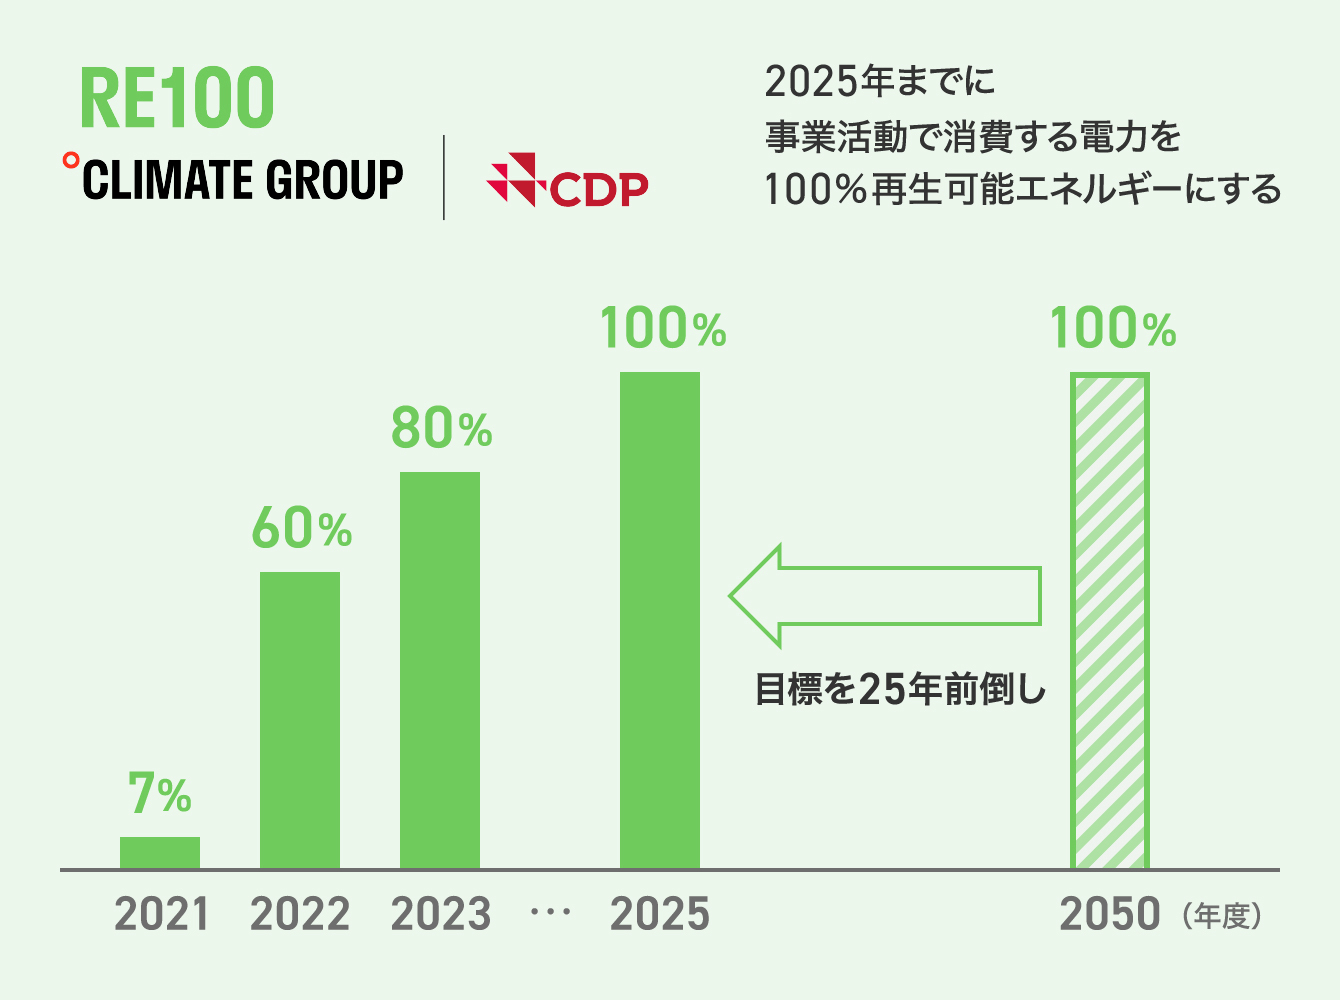 RE100 CLIMATE GROUP 2025年までに事業活動で消費する電力を100%再生可能エネルギーにする